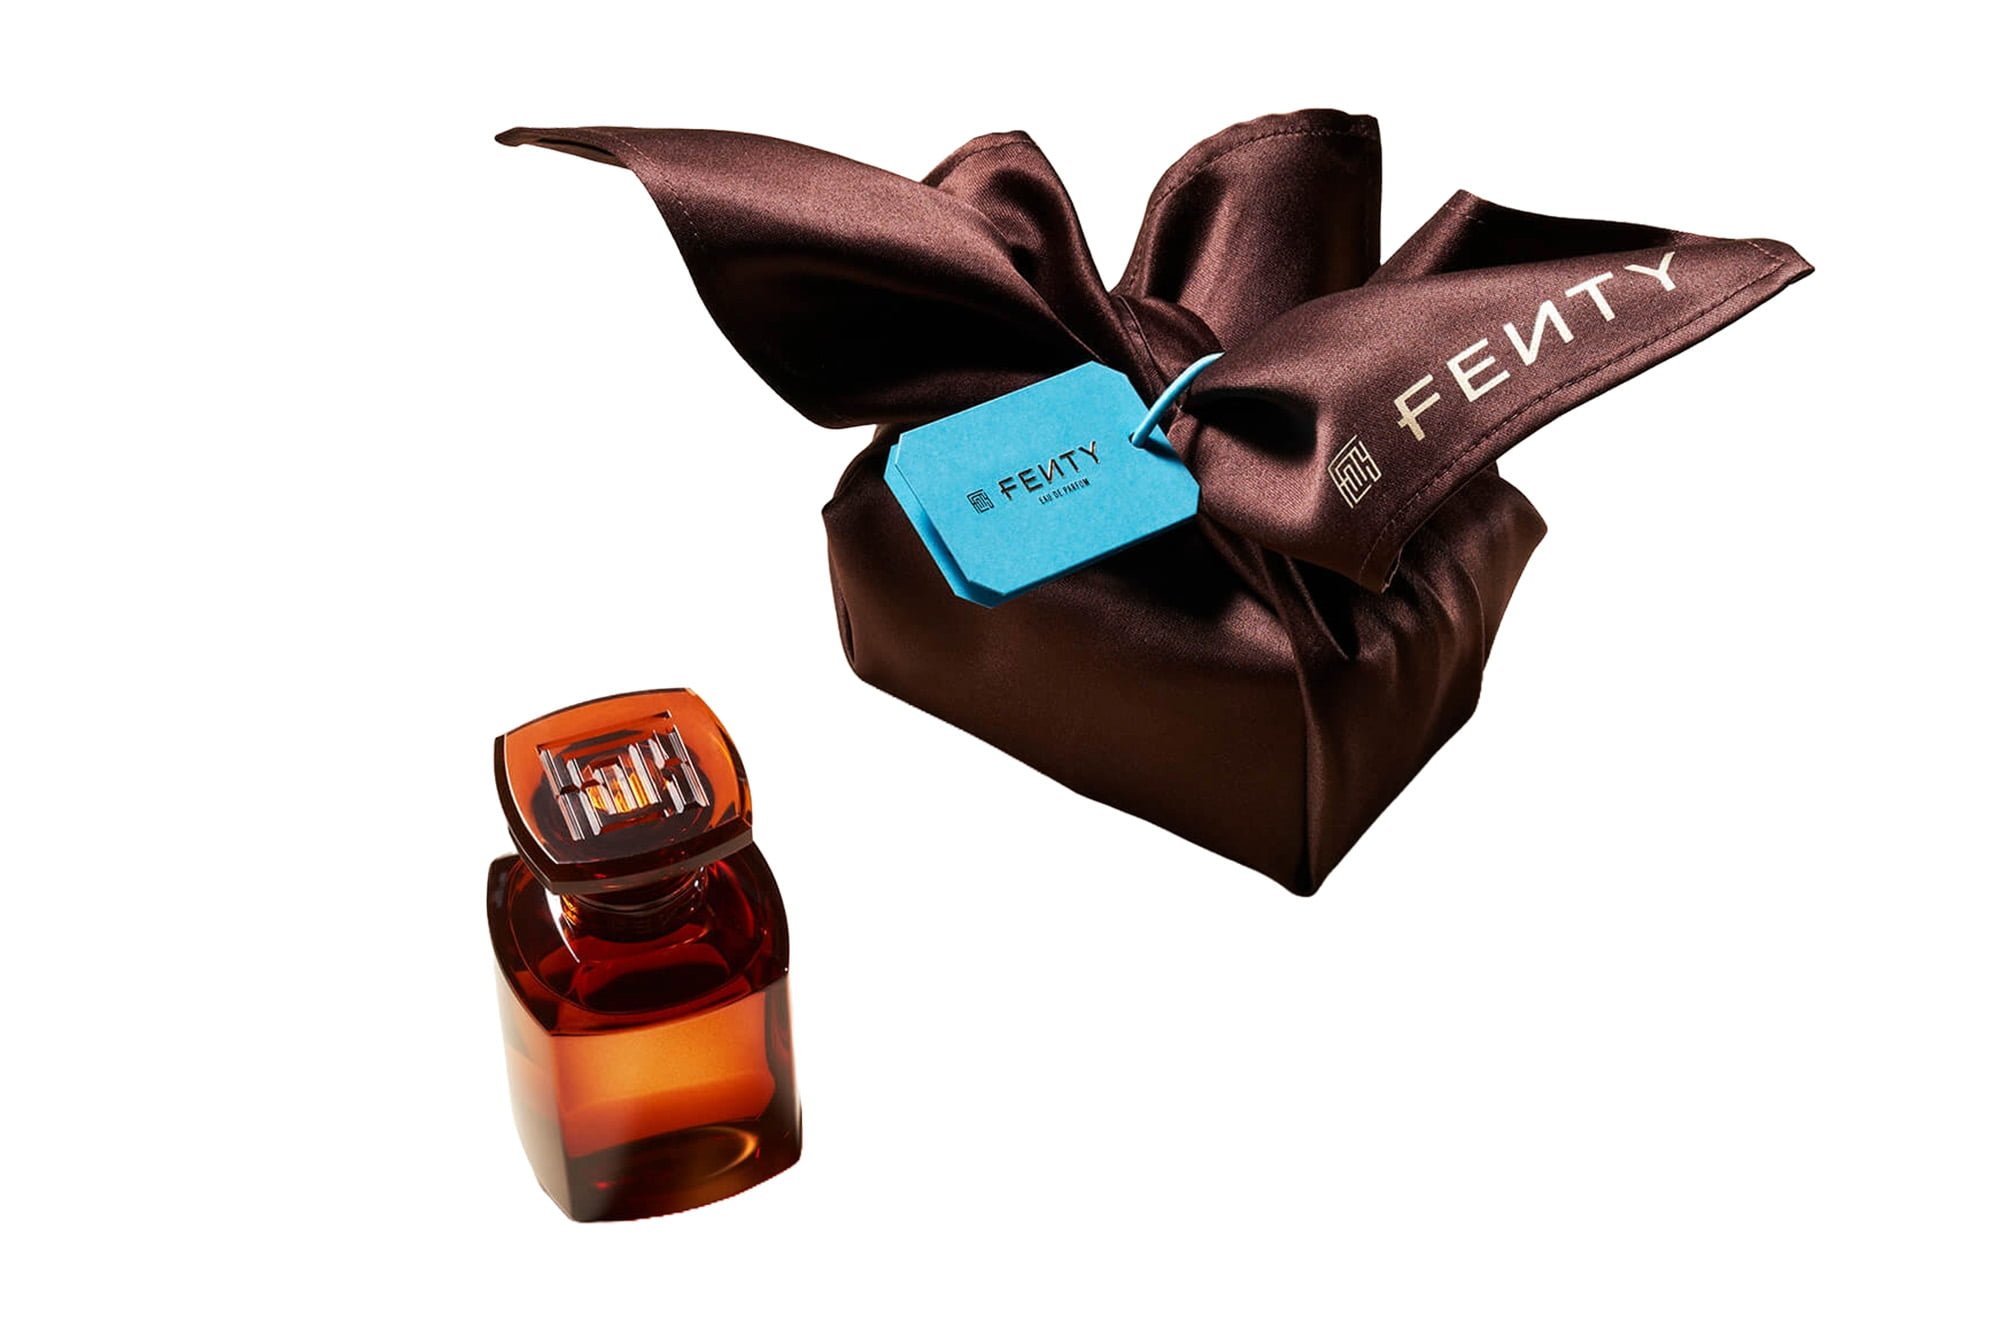 A Fenty holiday perfume set